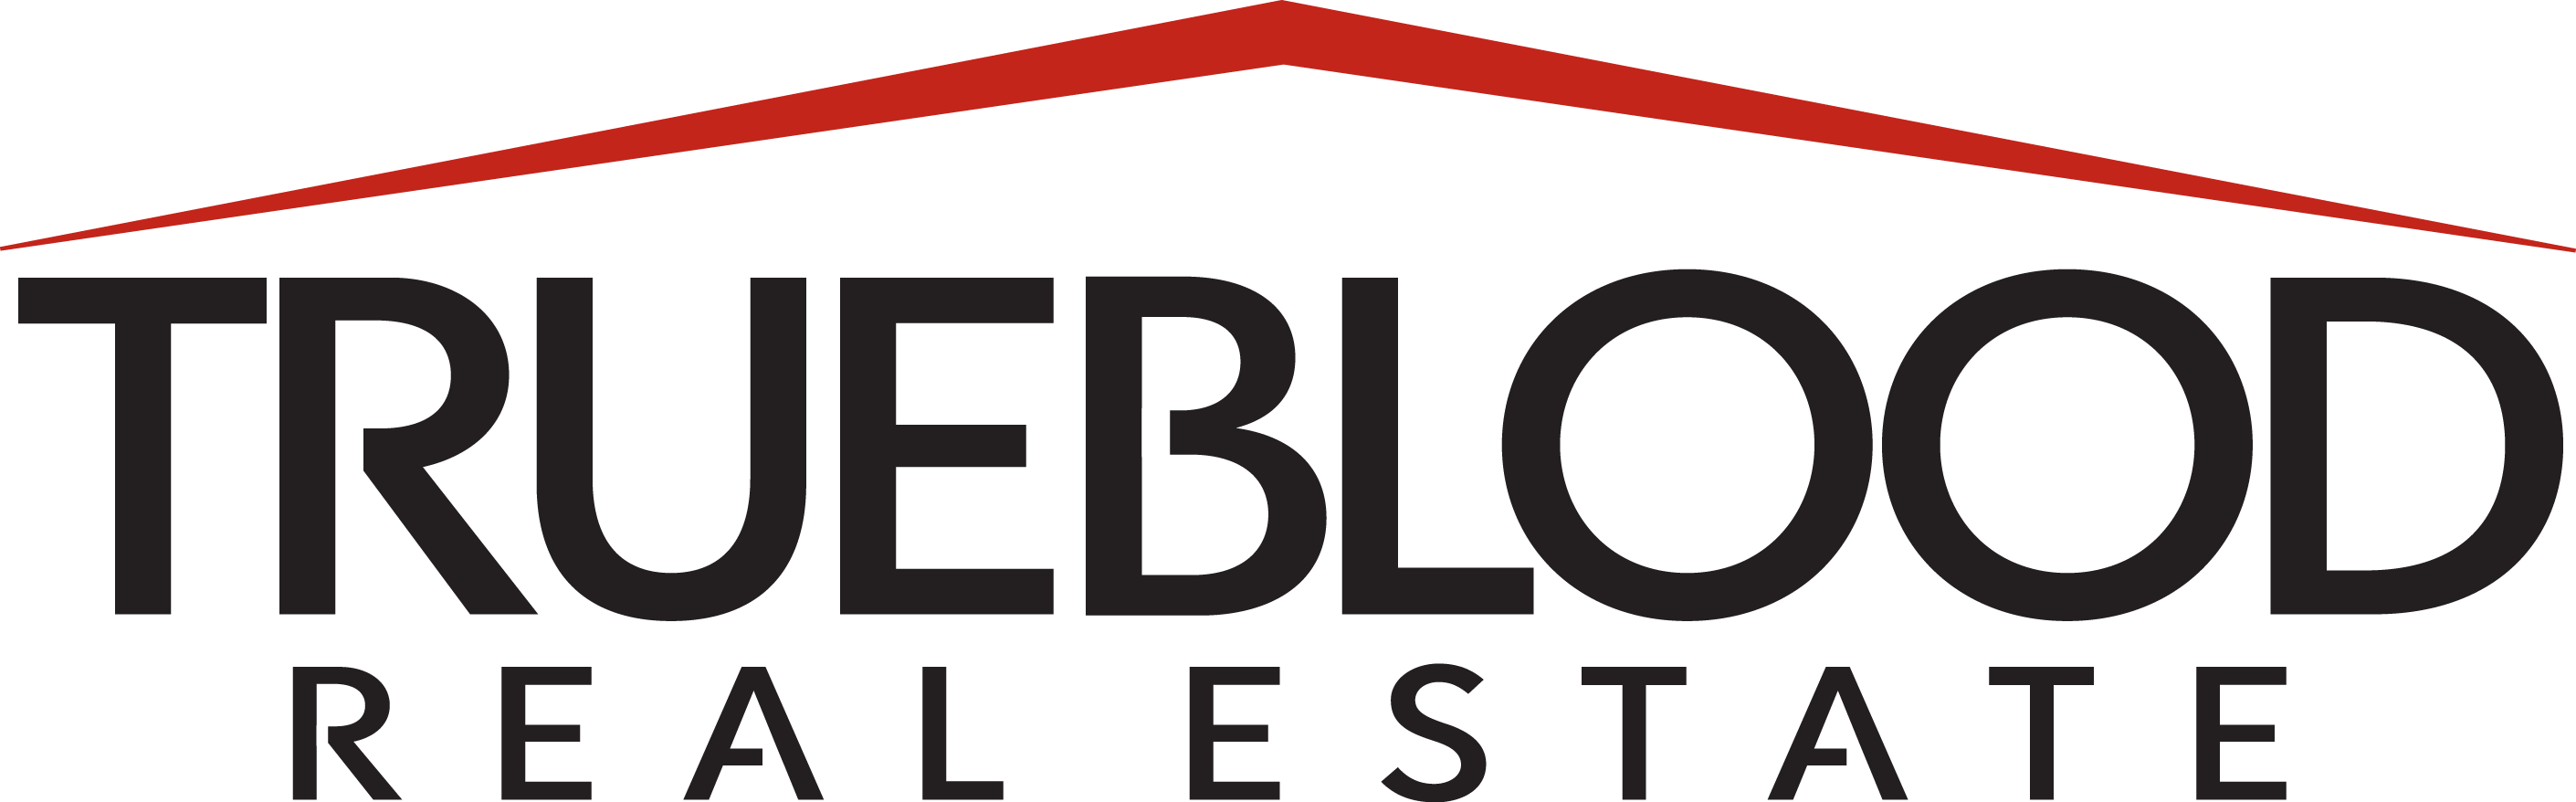 Trueblood Real Estate Company Logo